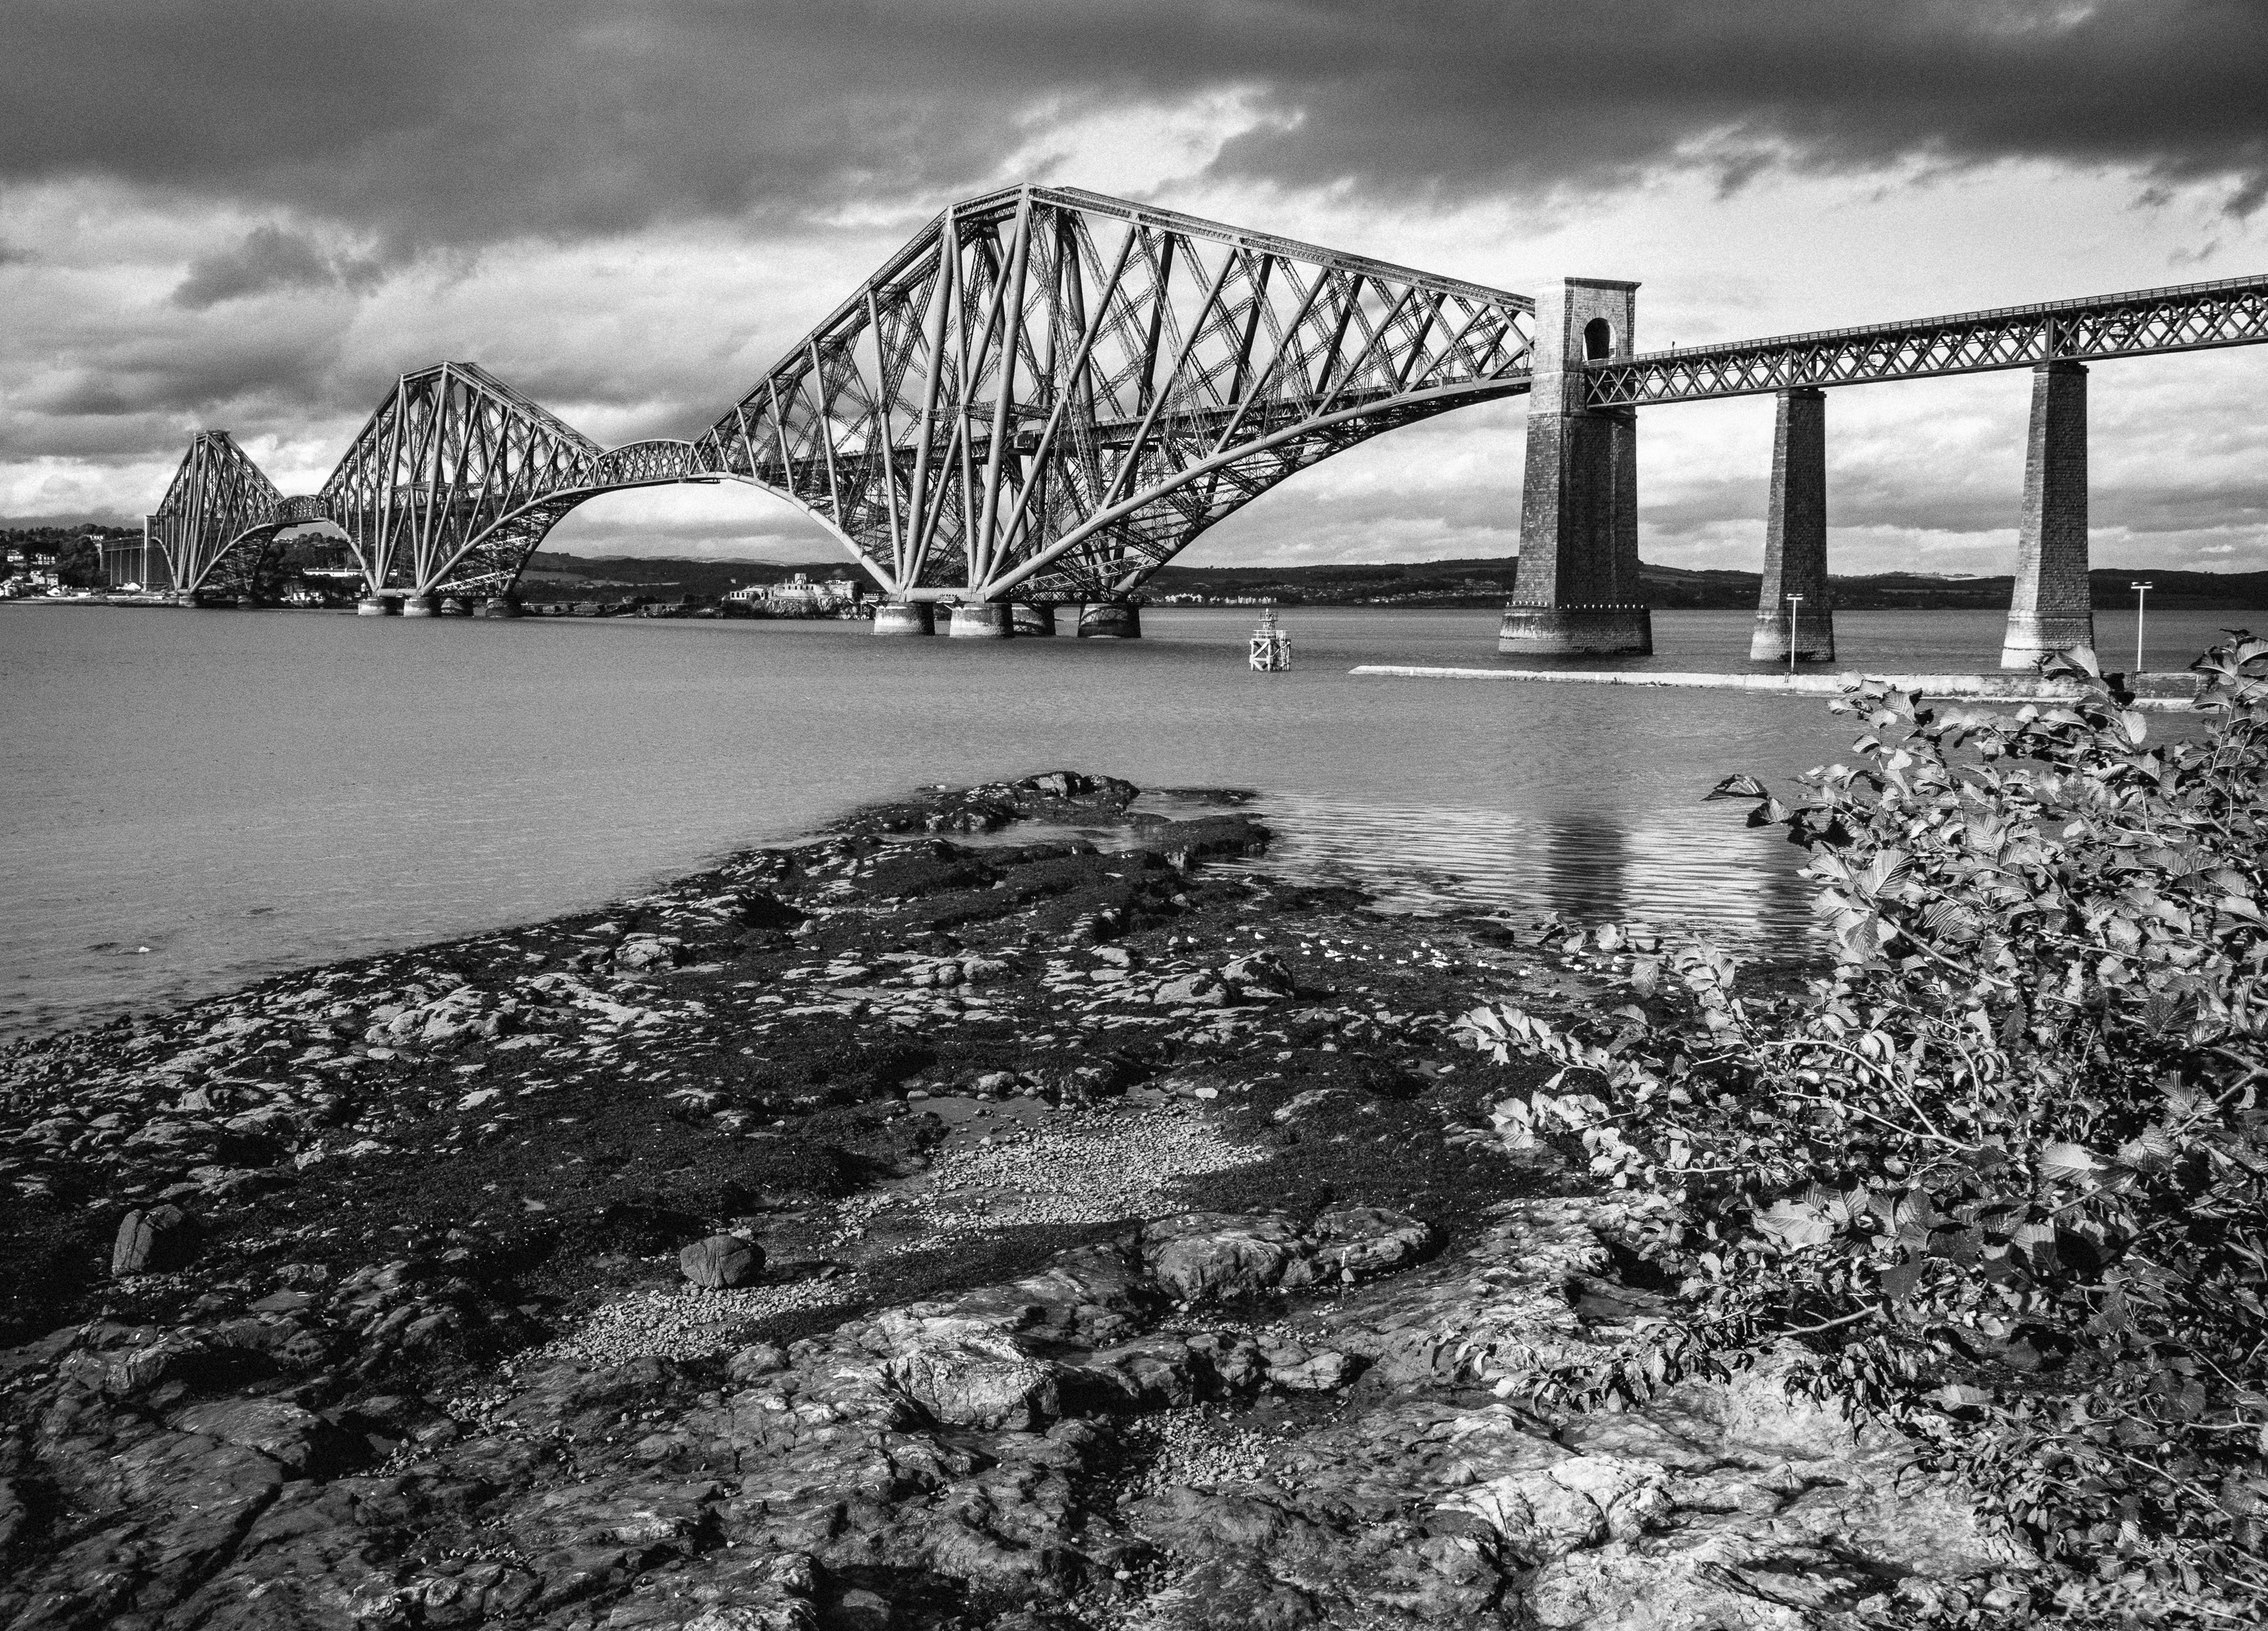 The Forth Rail Bridge, Scotland